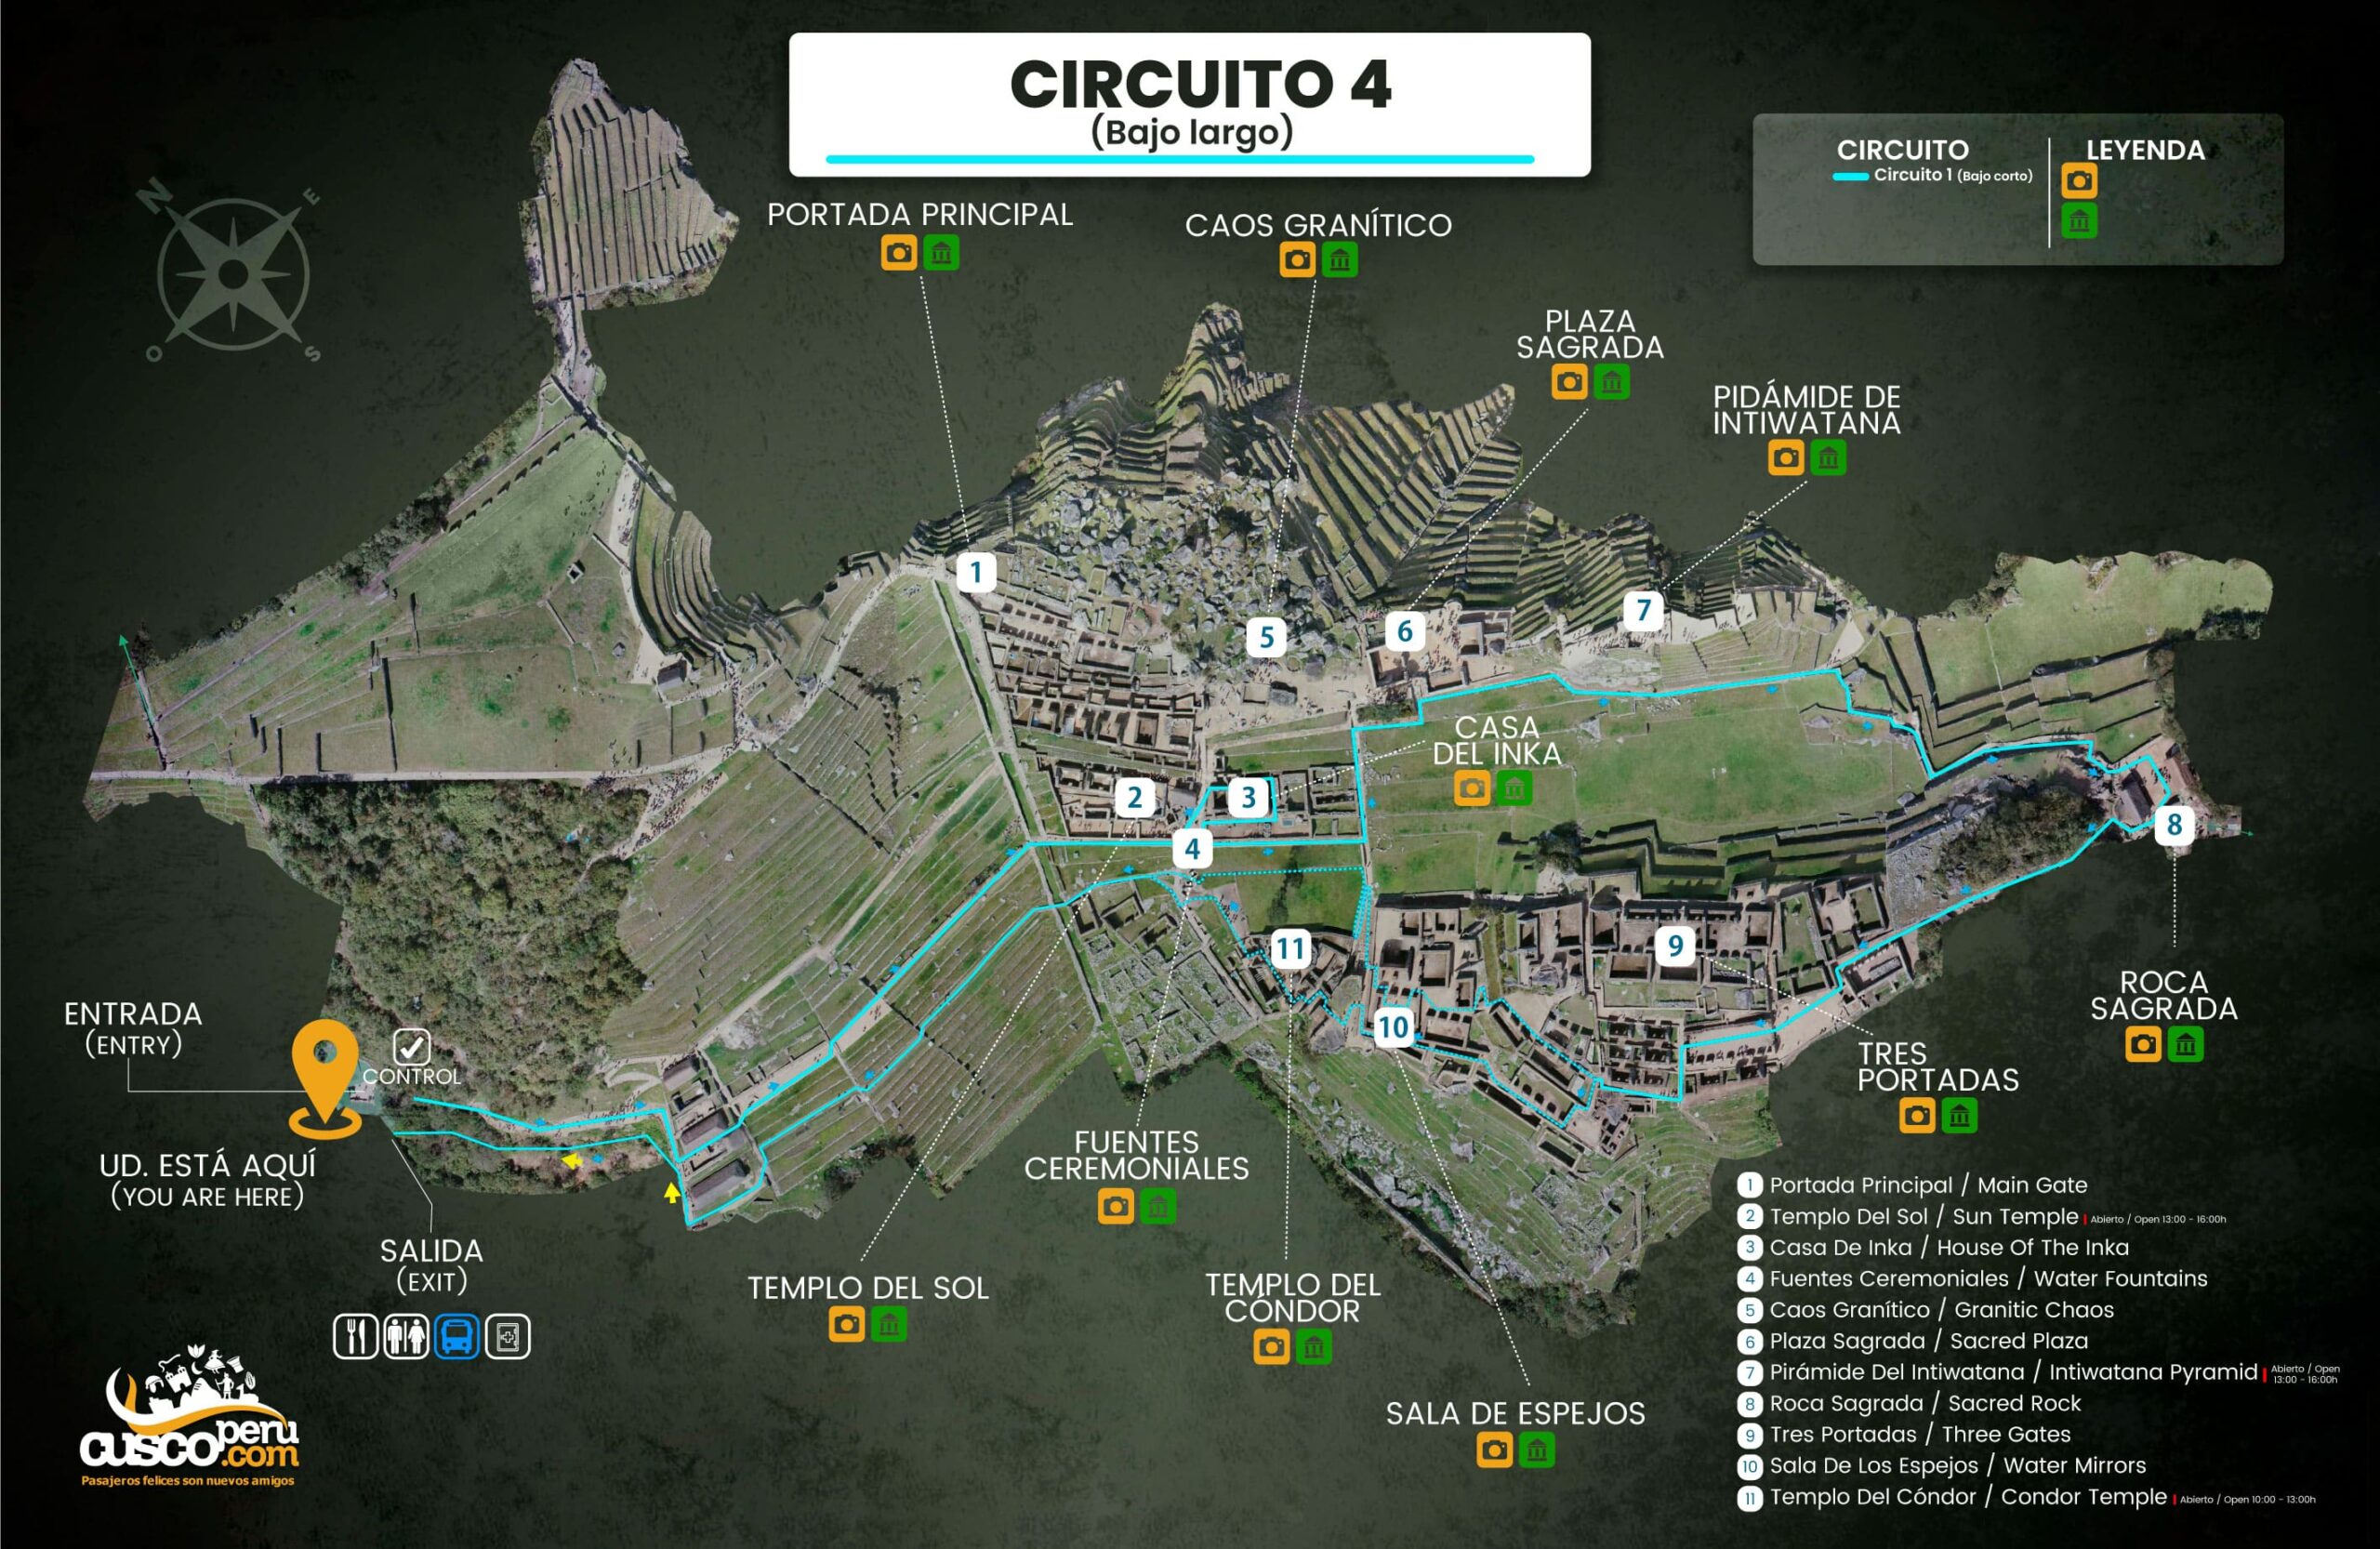 Mapa do Circuito 4 para Machu Picchu CuscoPeru.com